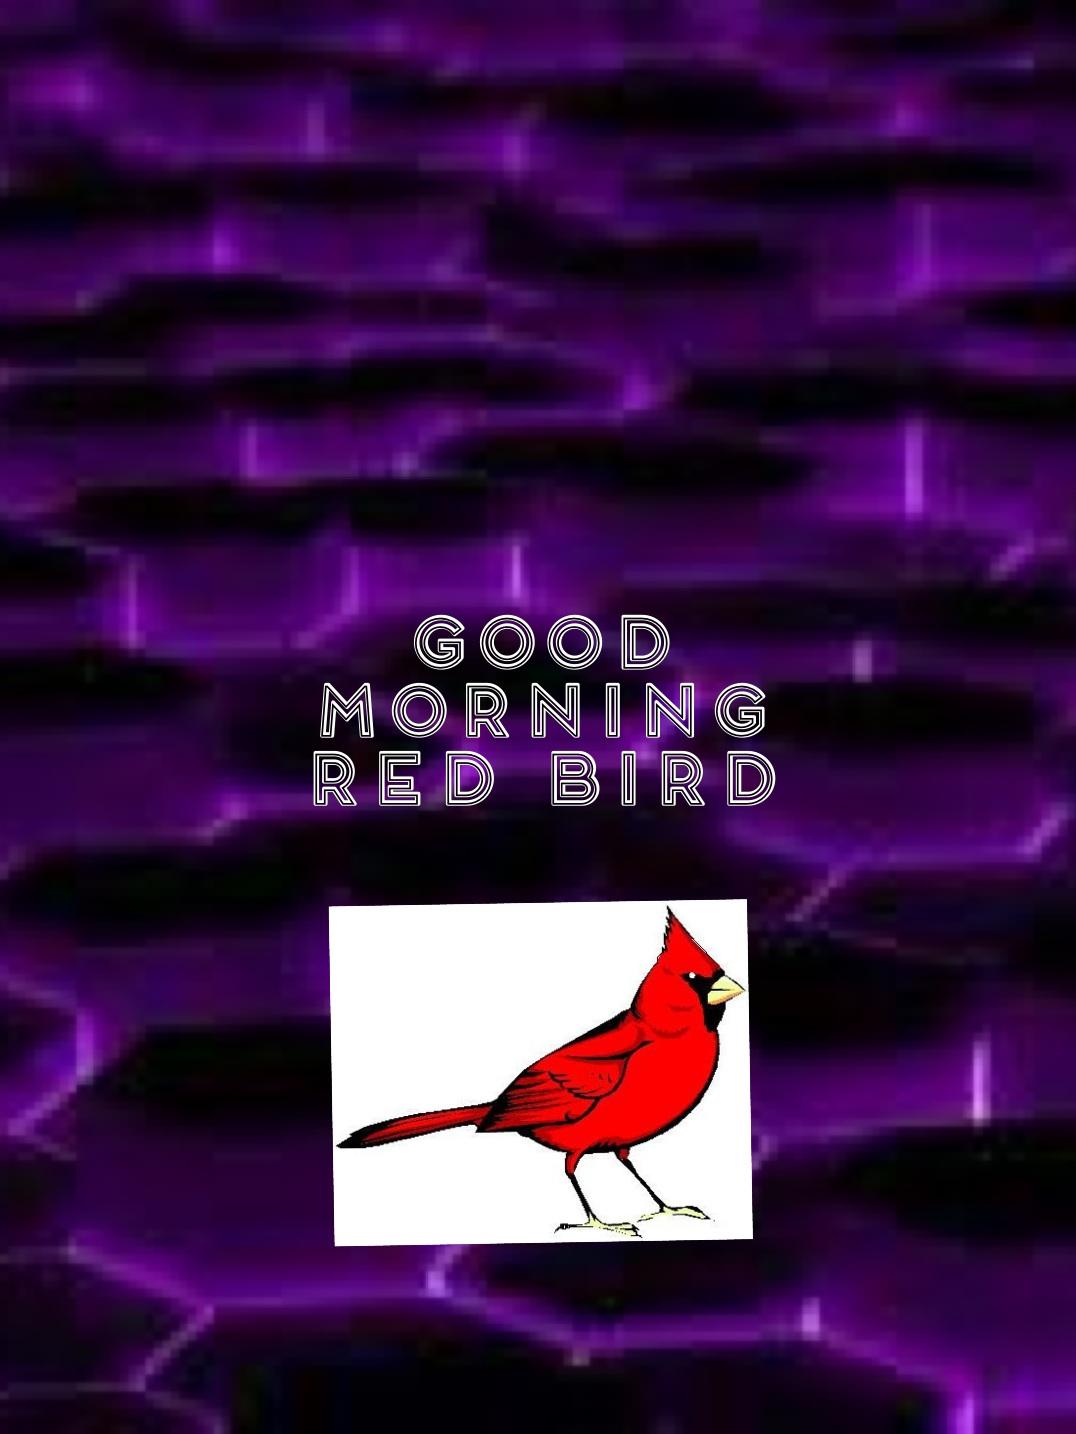 Good morning red bird